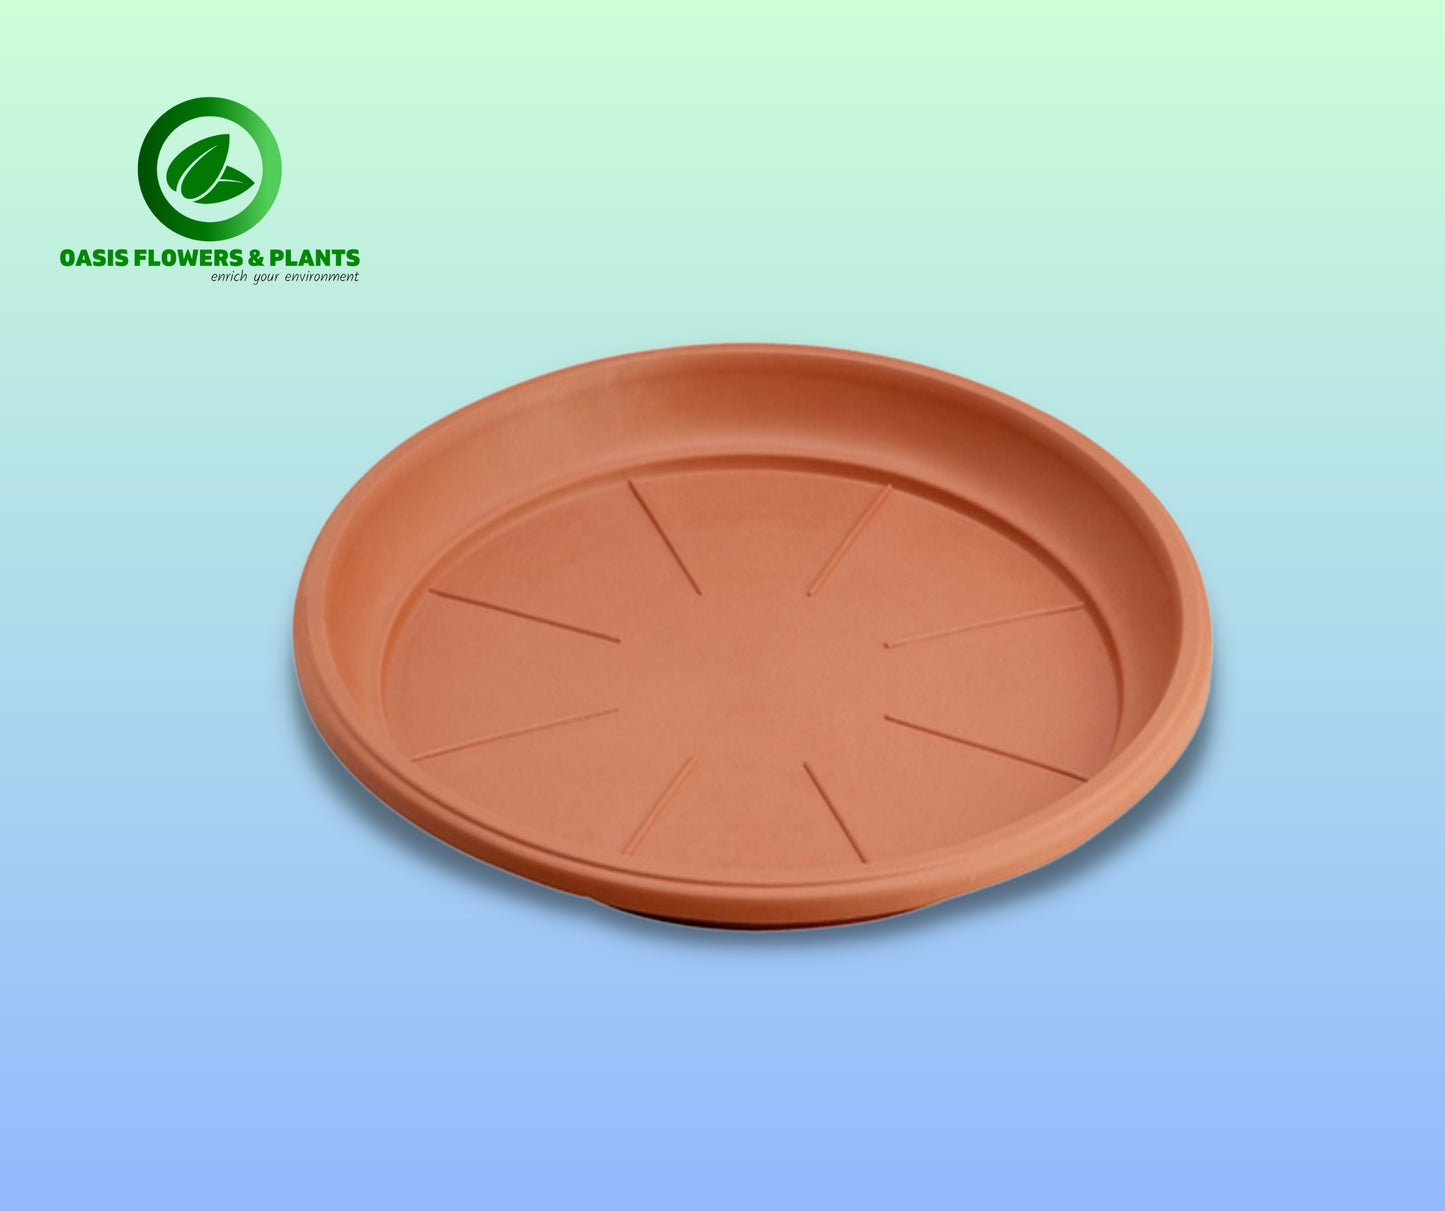 Brawn Round Plastic Plate - طبق بلاستيك دائري براون